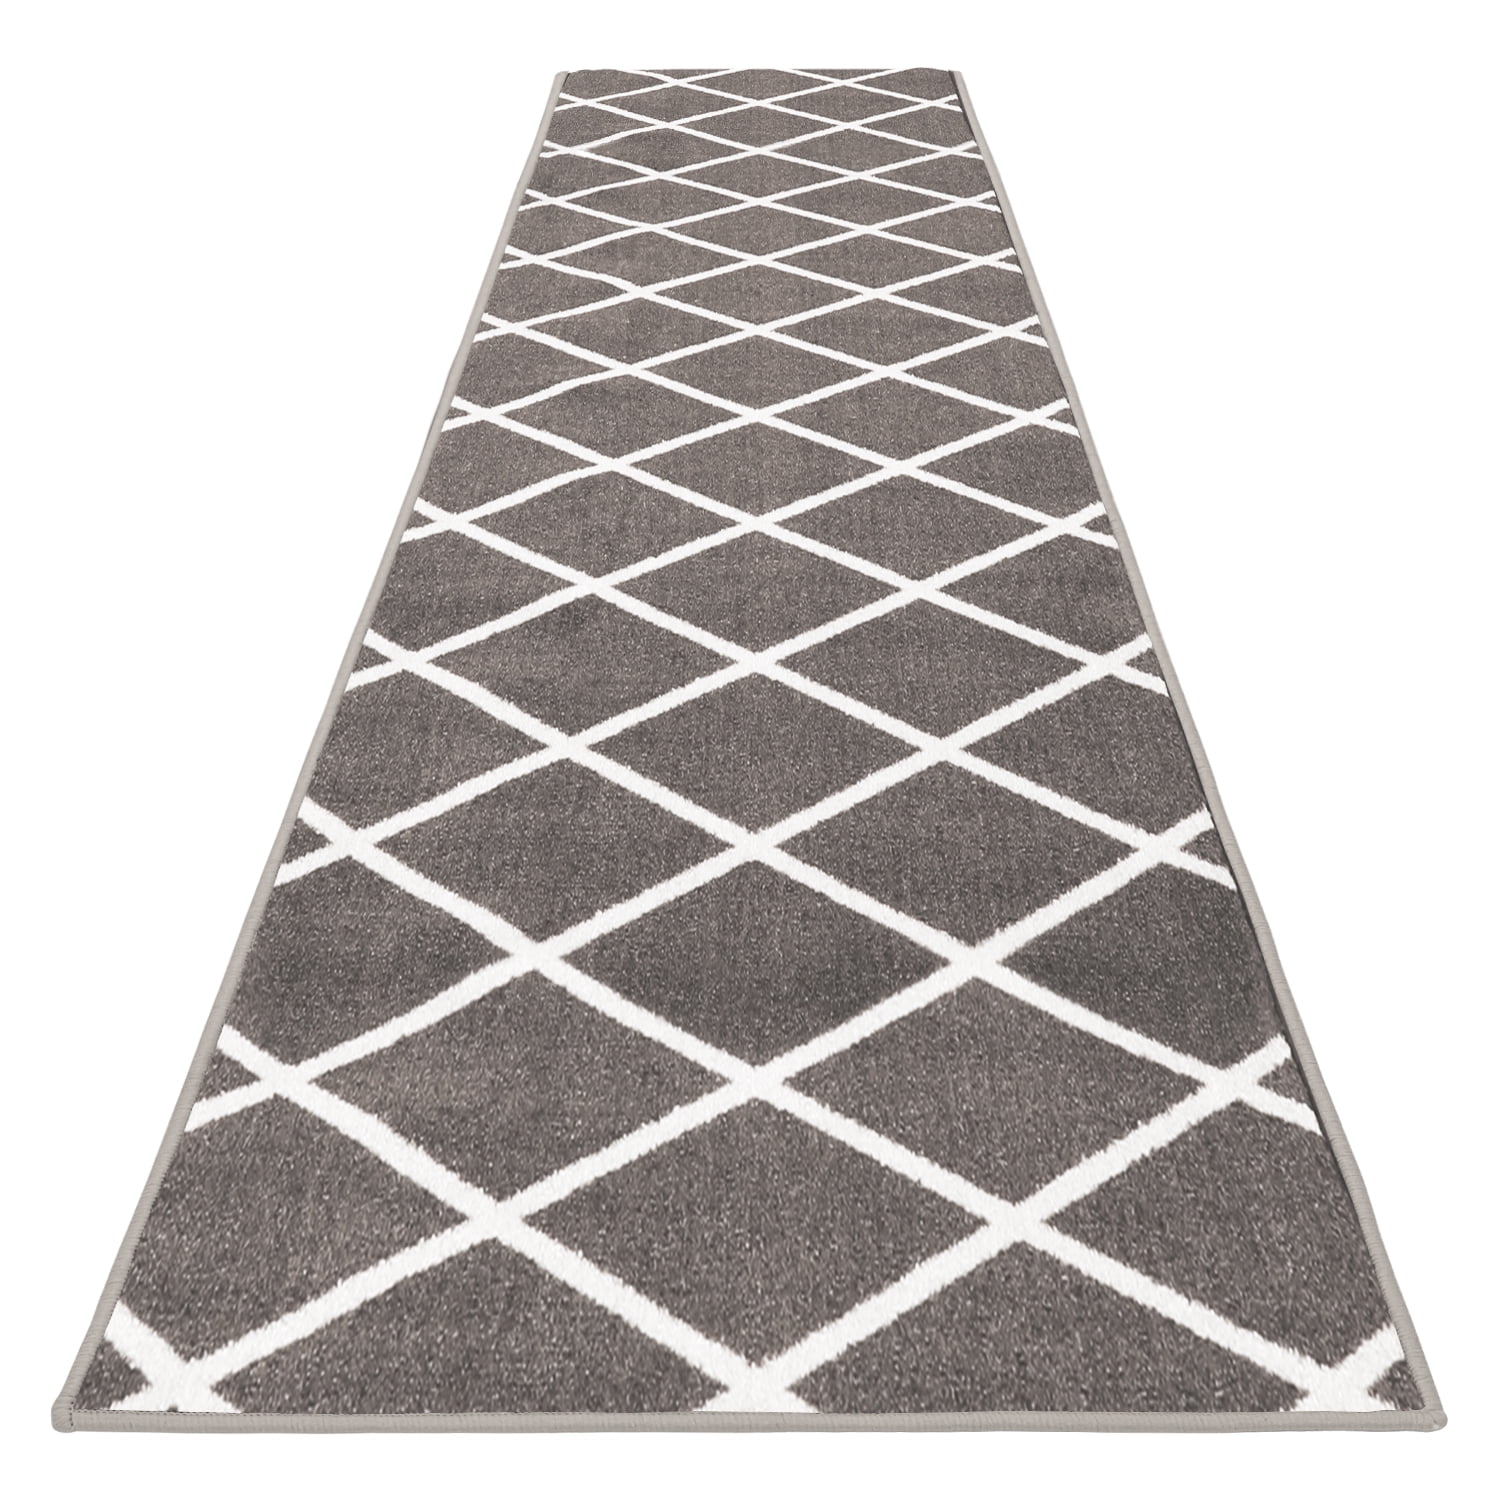 New Floor Carpet Protection Herringbone Secure Runner Protector Clear 70cm x 4m